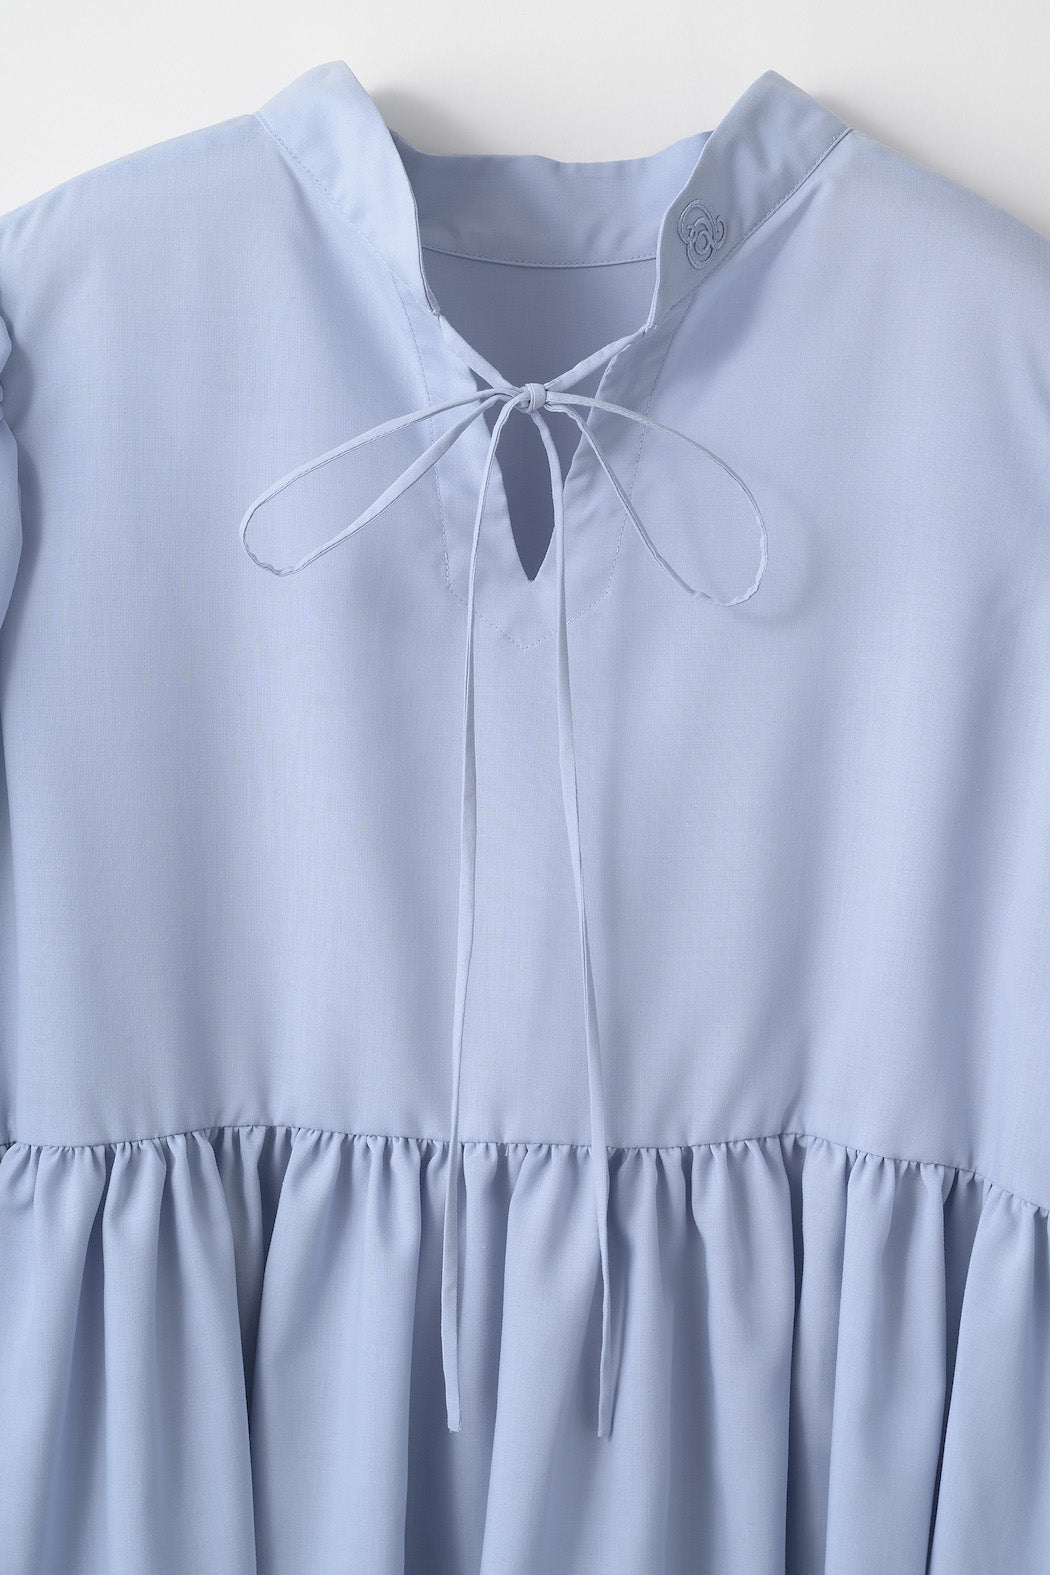 Audire switch blouse (Light blue)